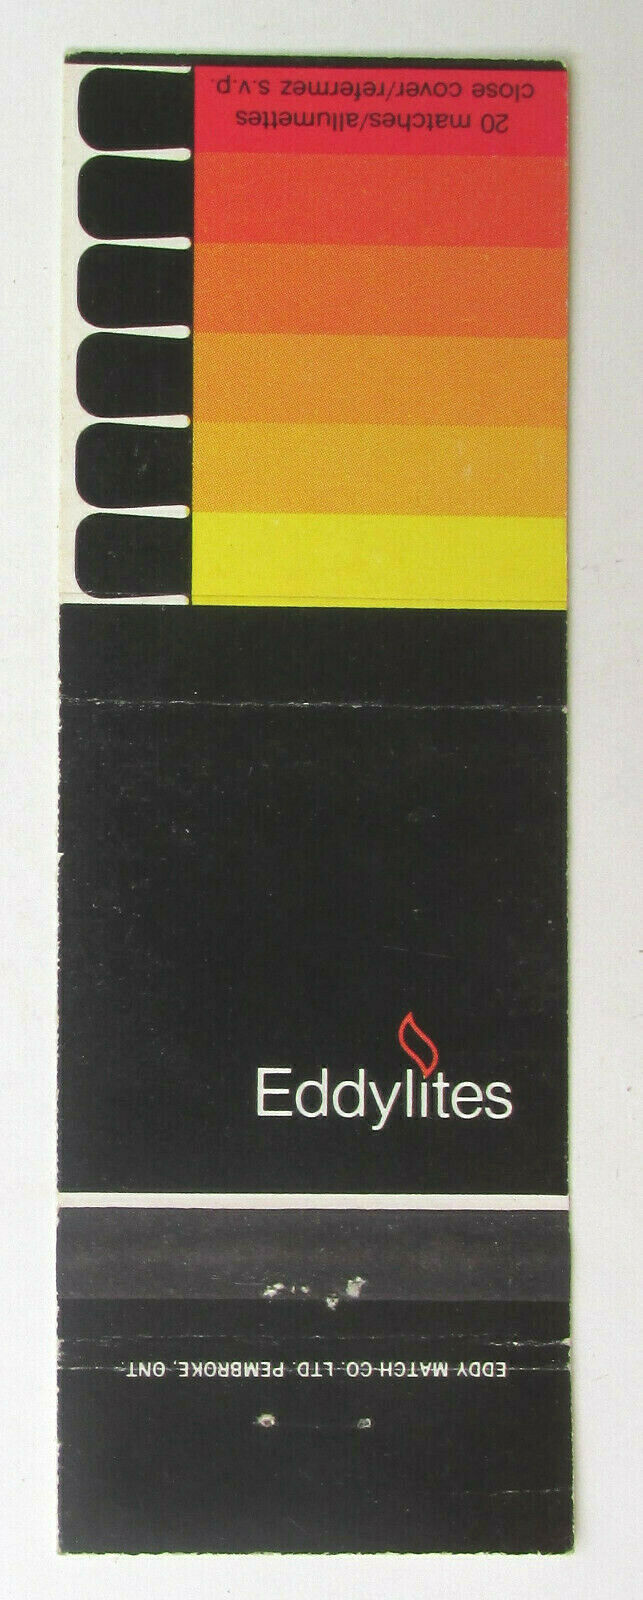 Eddylites - Eddy Match Co. Ltd. Pembroke, Ont. Canada 20 Matches Matchbook Cover - $1.50